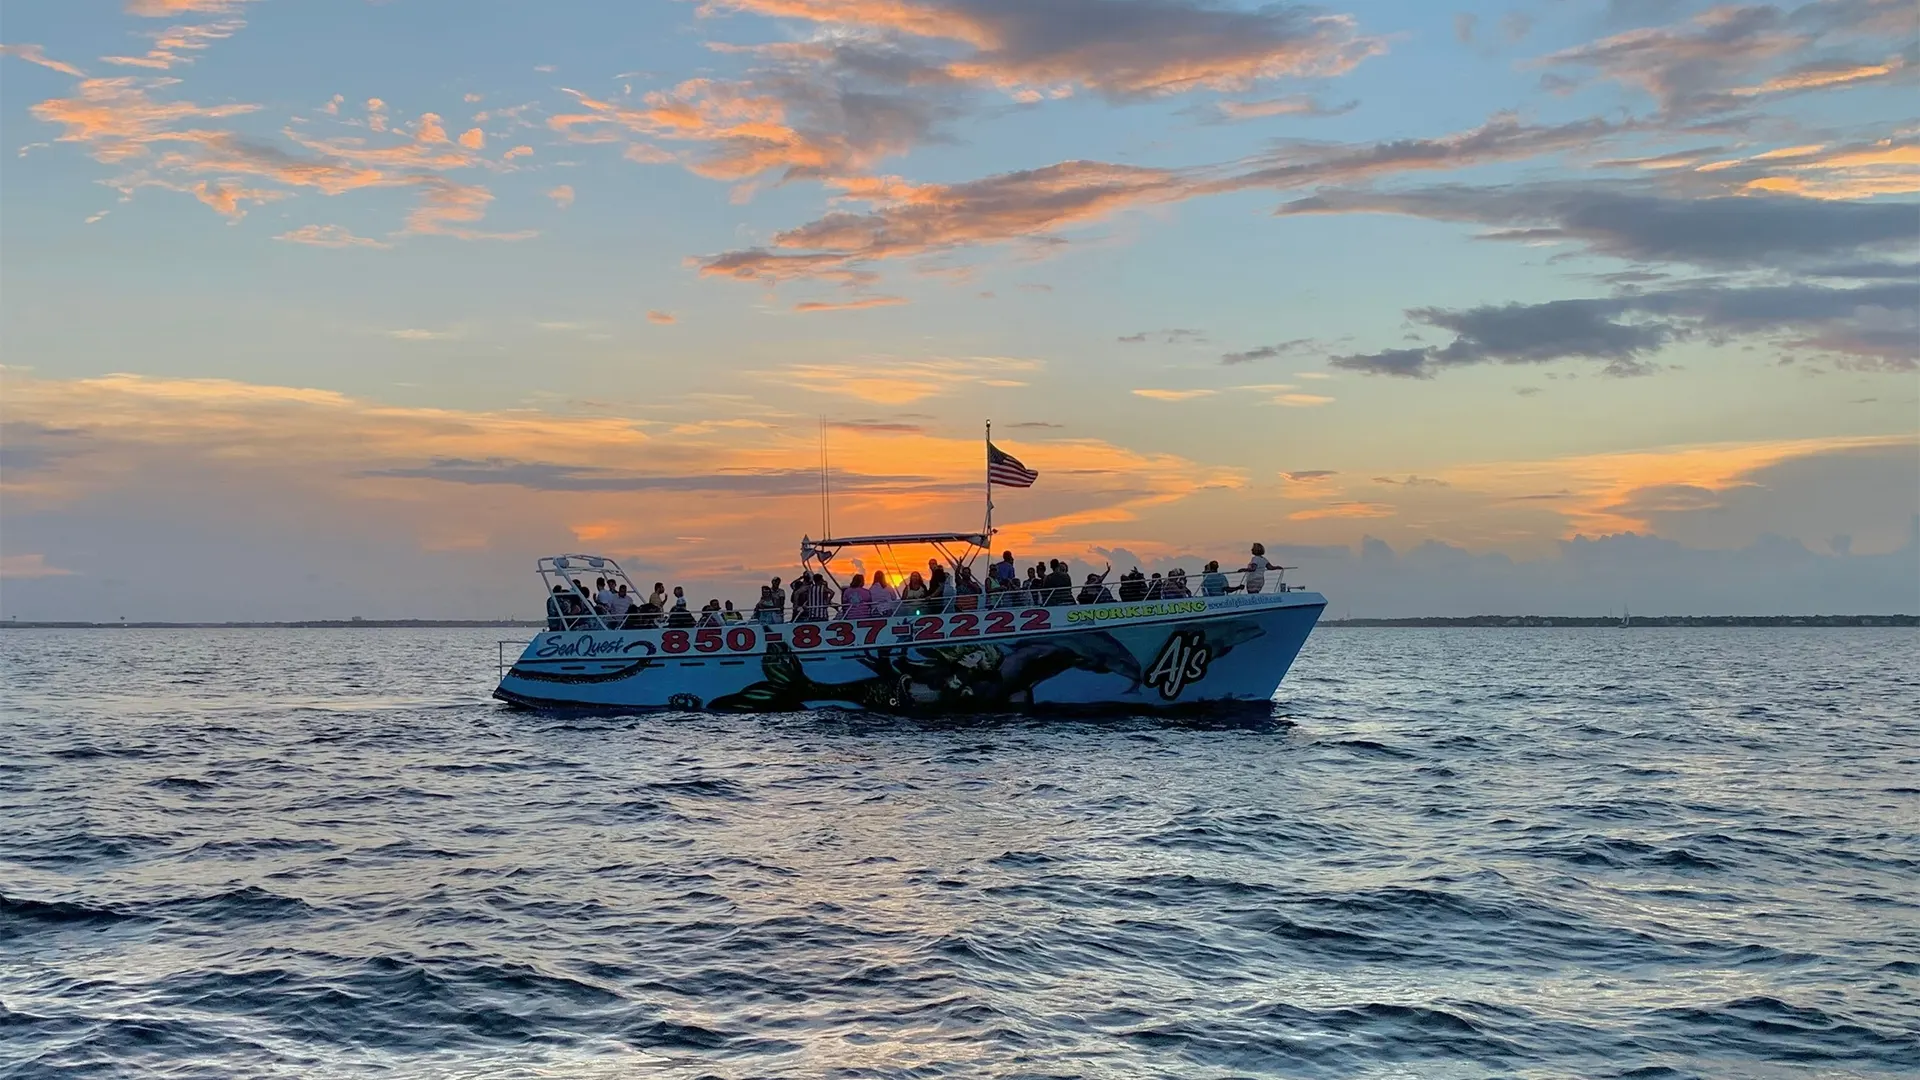 aj's sunset dolphin cruise